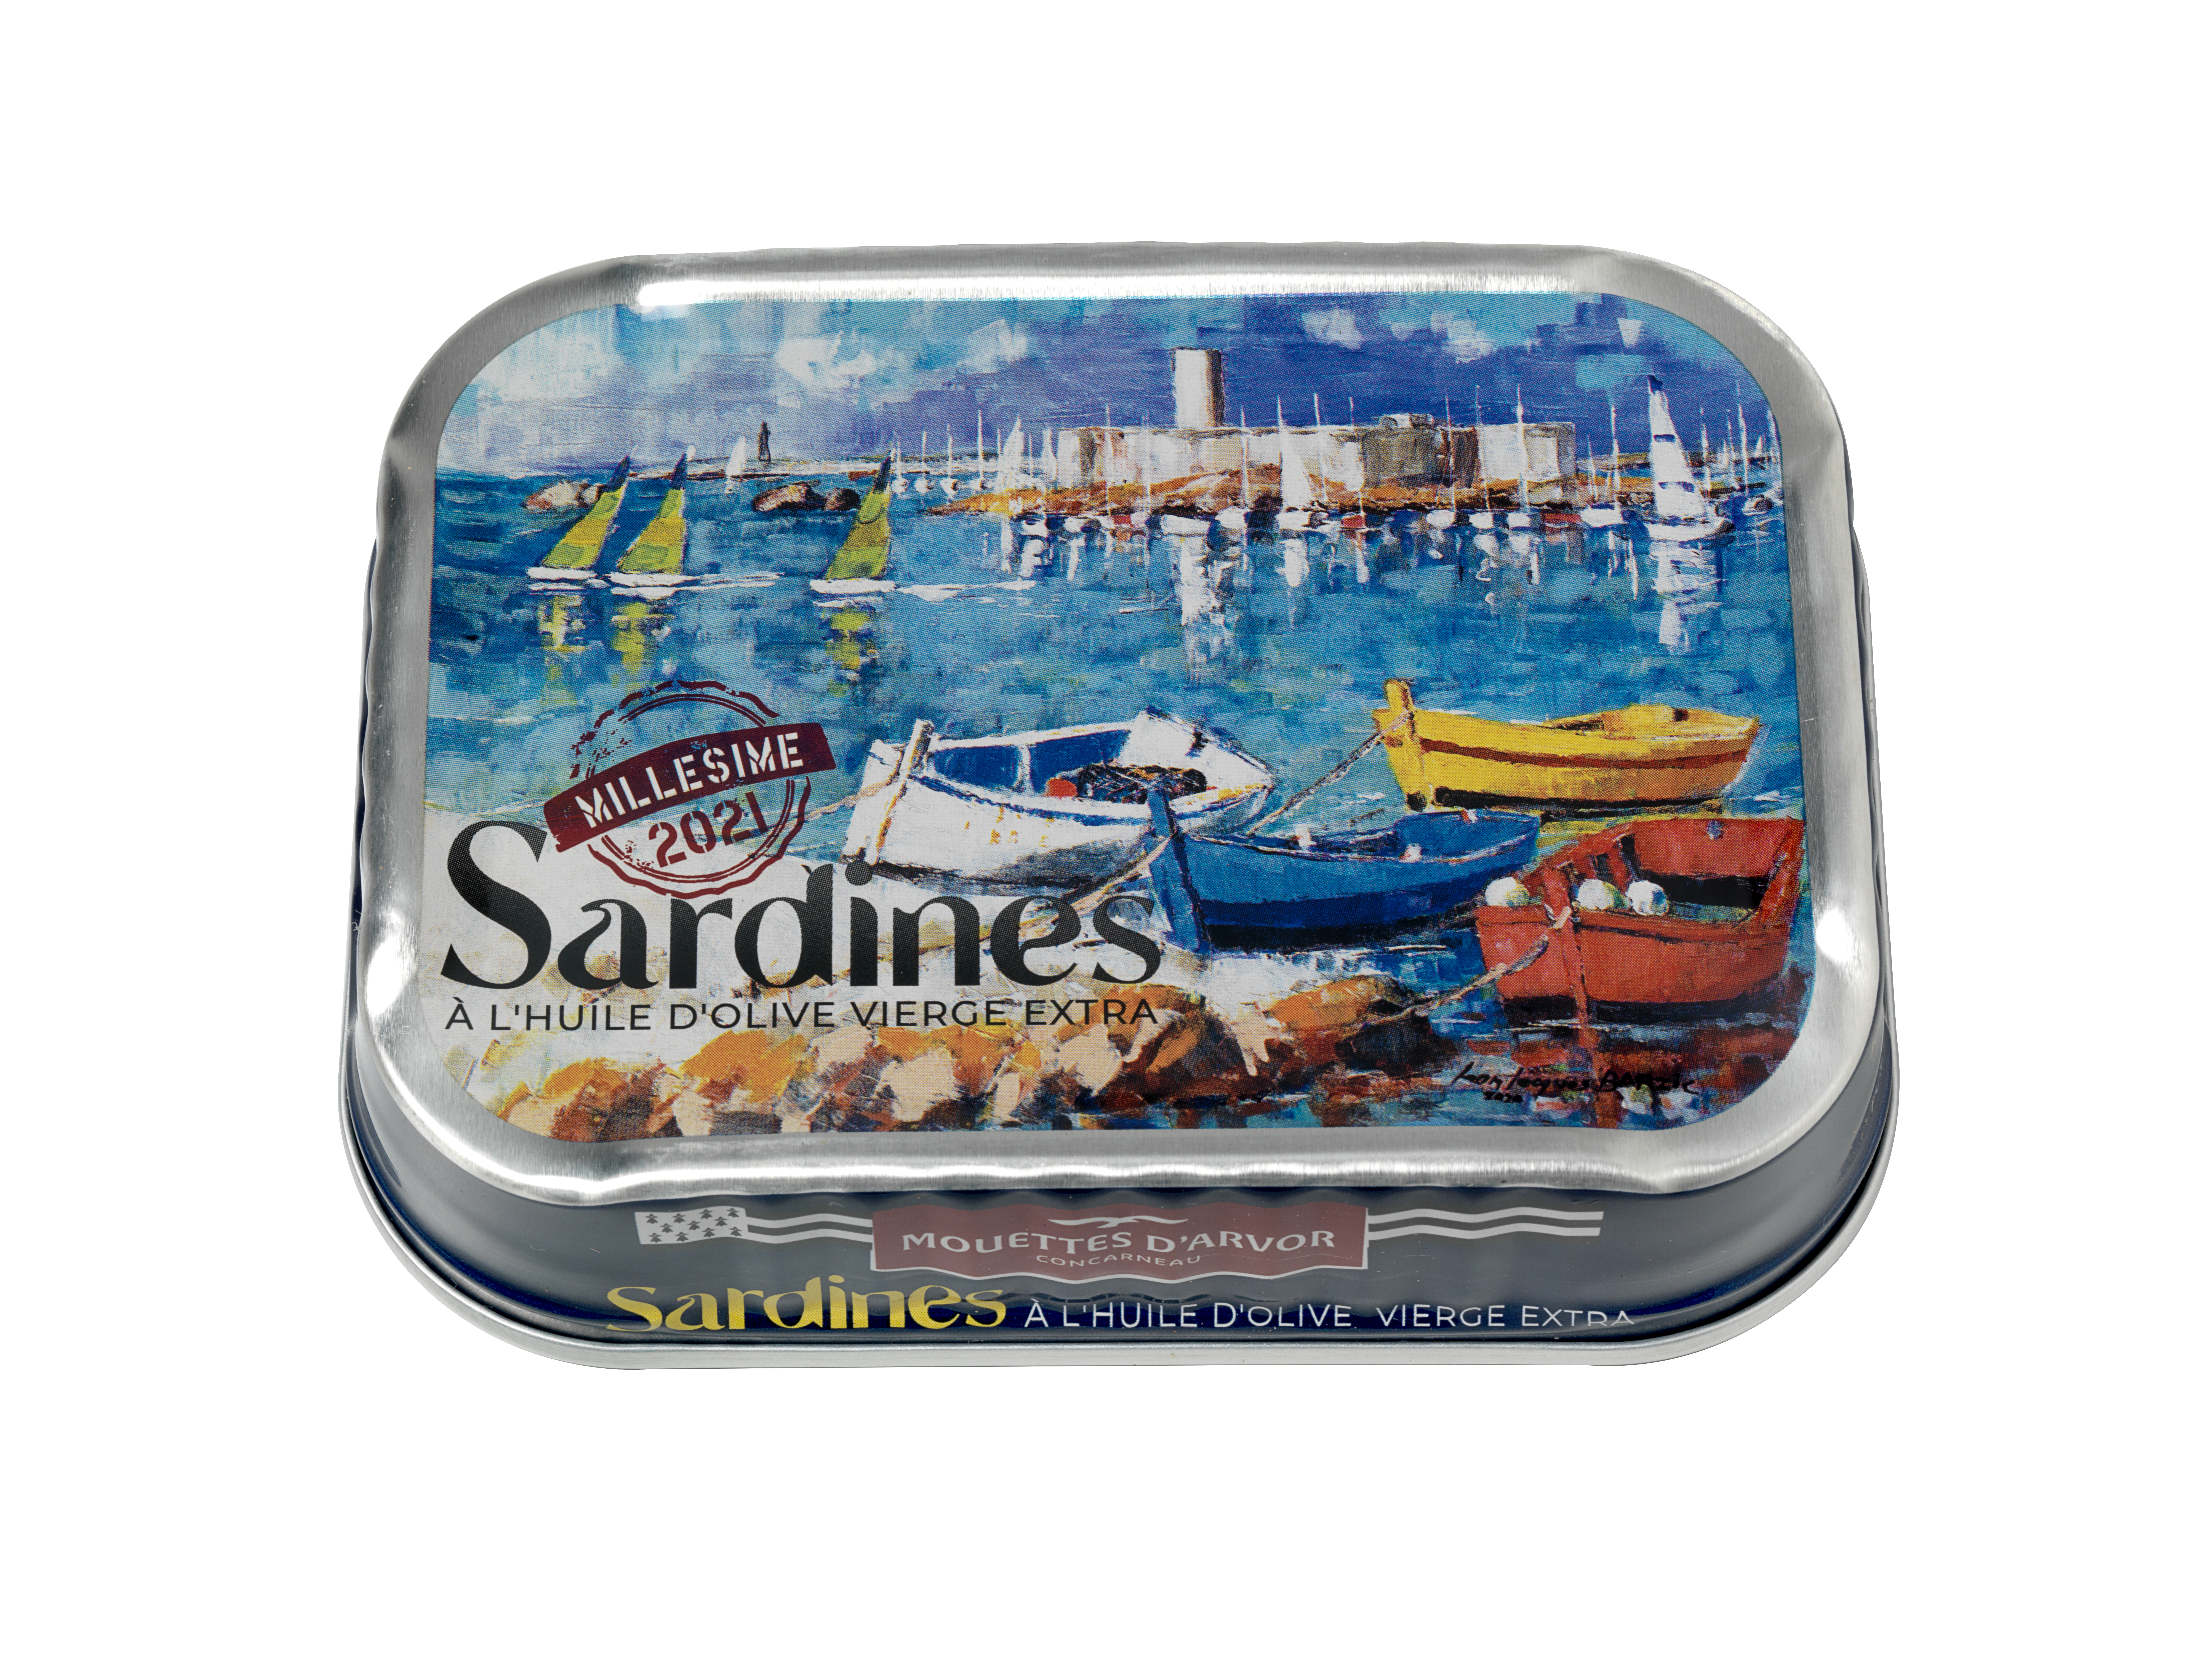 Limited vintage can of sardines Ville Bleue 2021